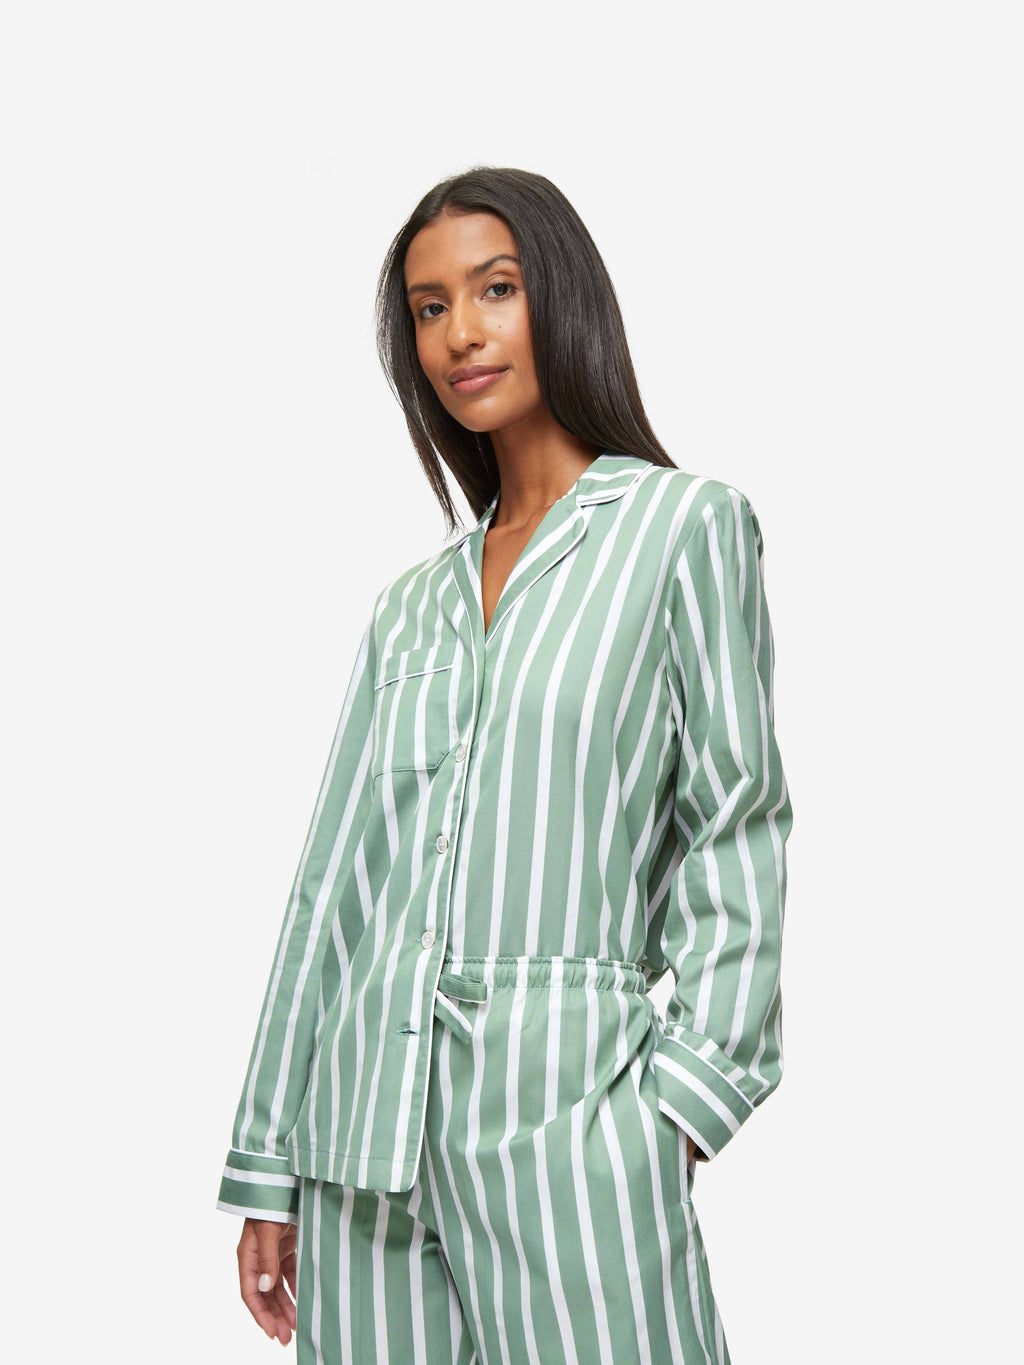 LCDIUDIU Pyjamas,Women'S Cotton Pyjama Sets Vintage Green Lapel